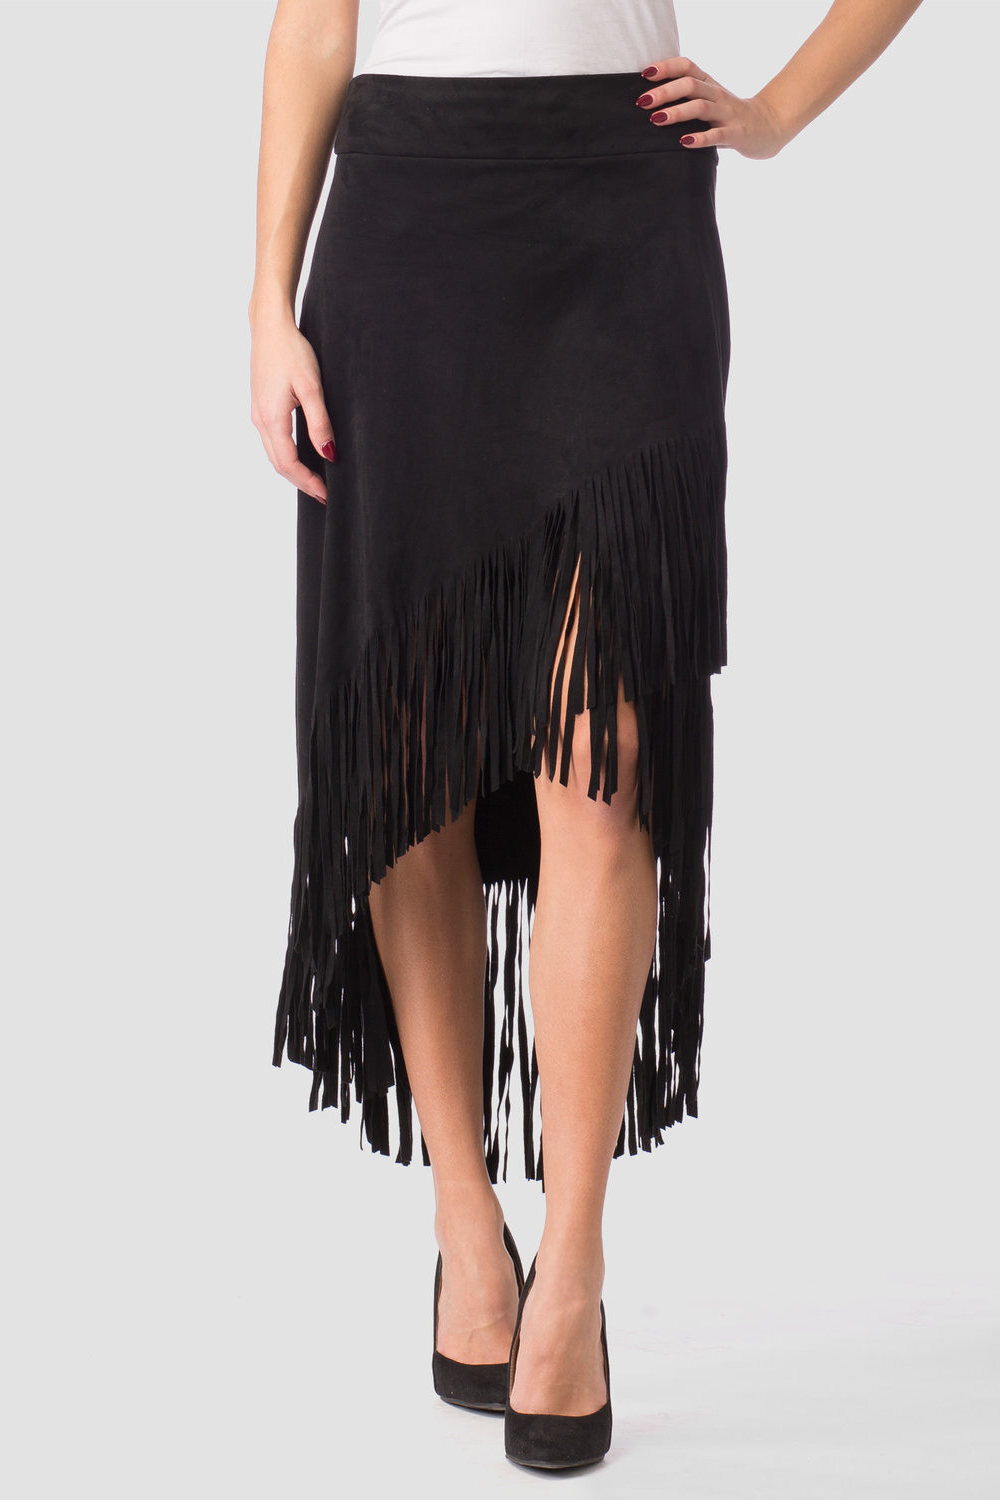 Joseph Ribkoff skirt style 171388. Black